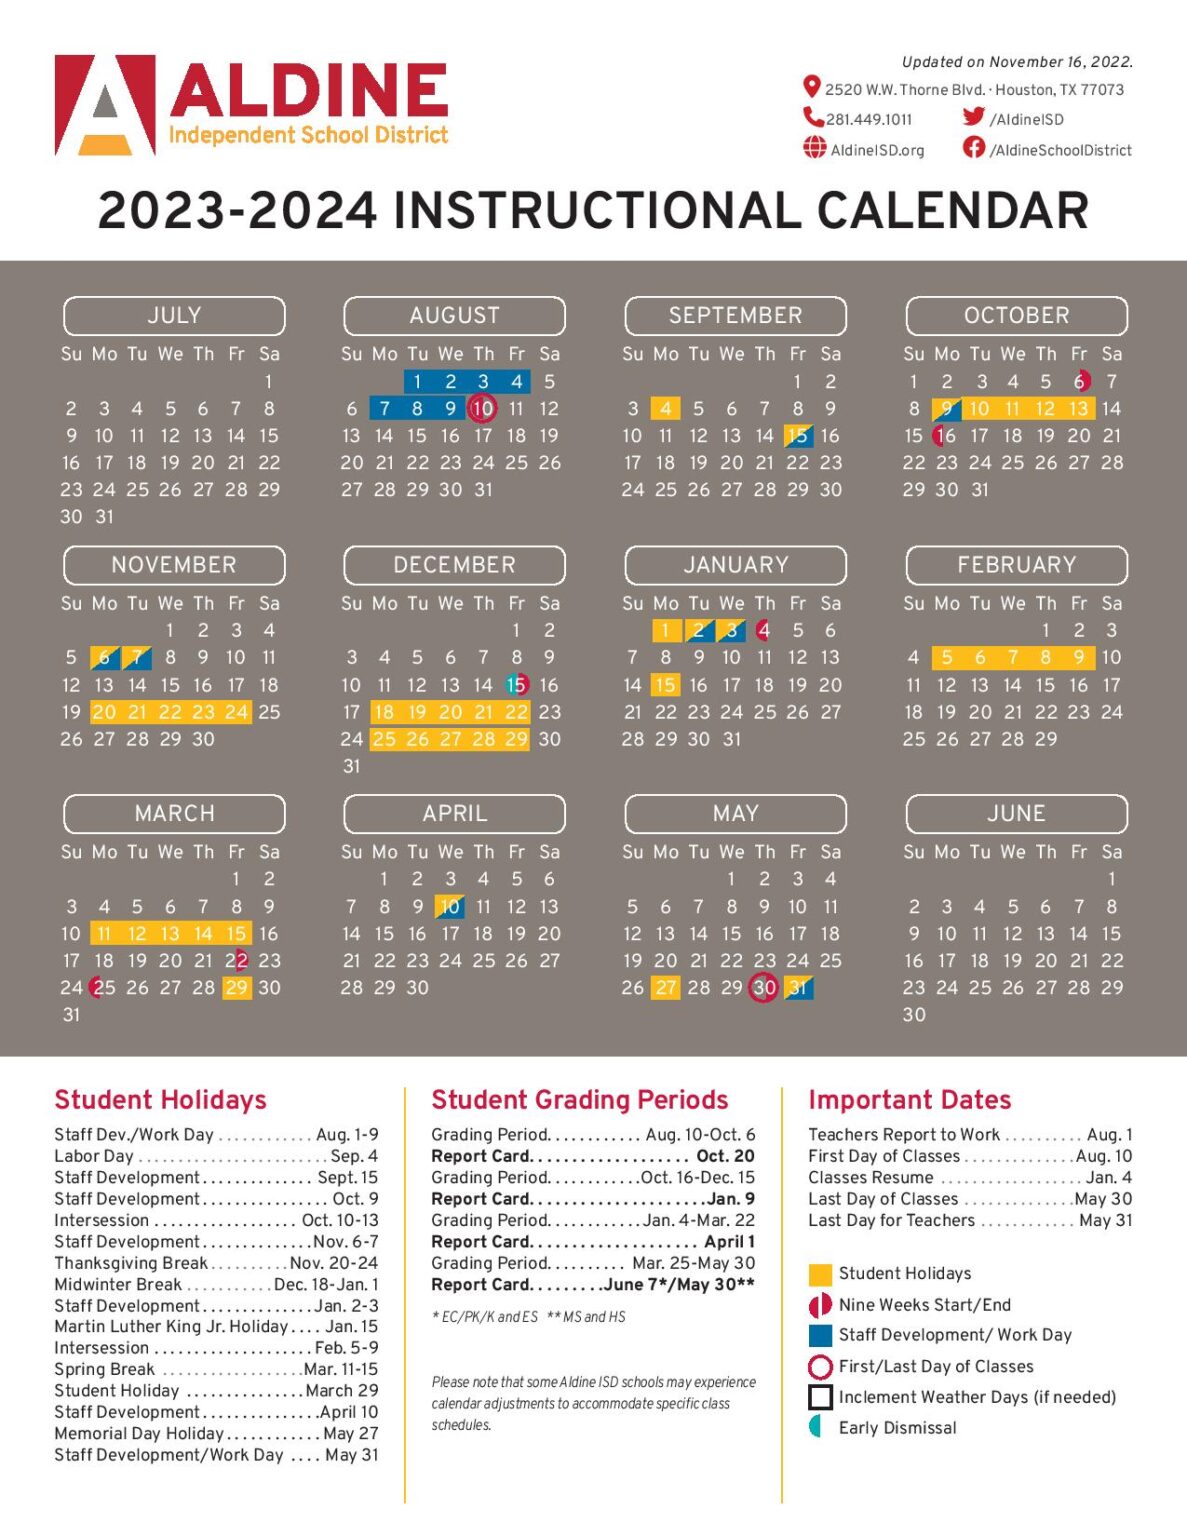 Aldine Independent School District Calendar 2023 2024 in PDF